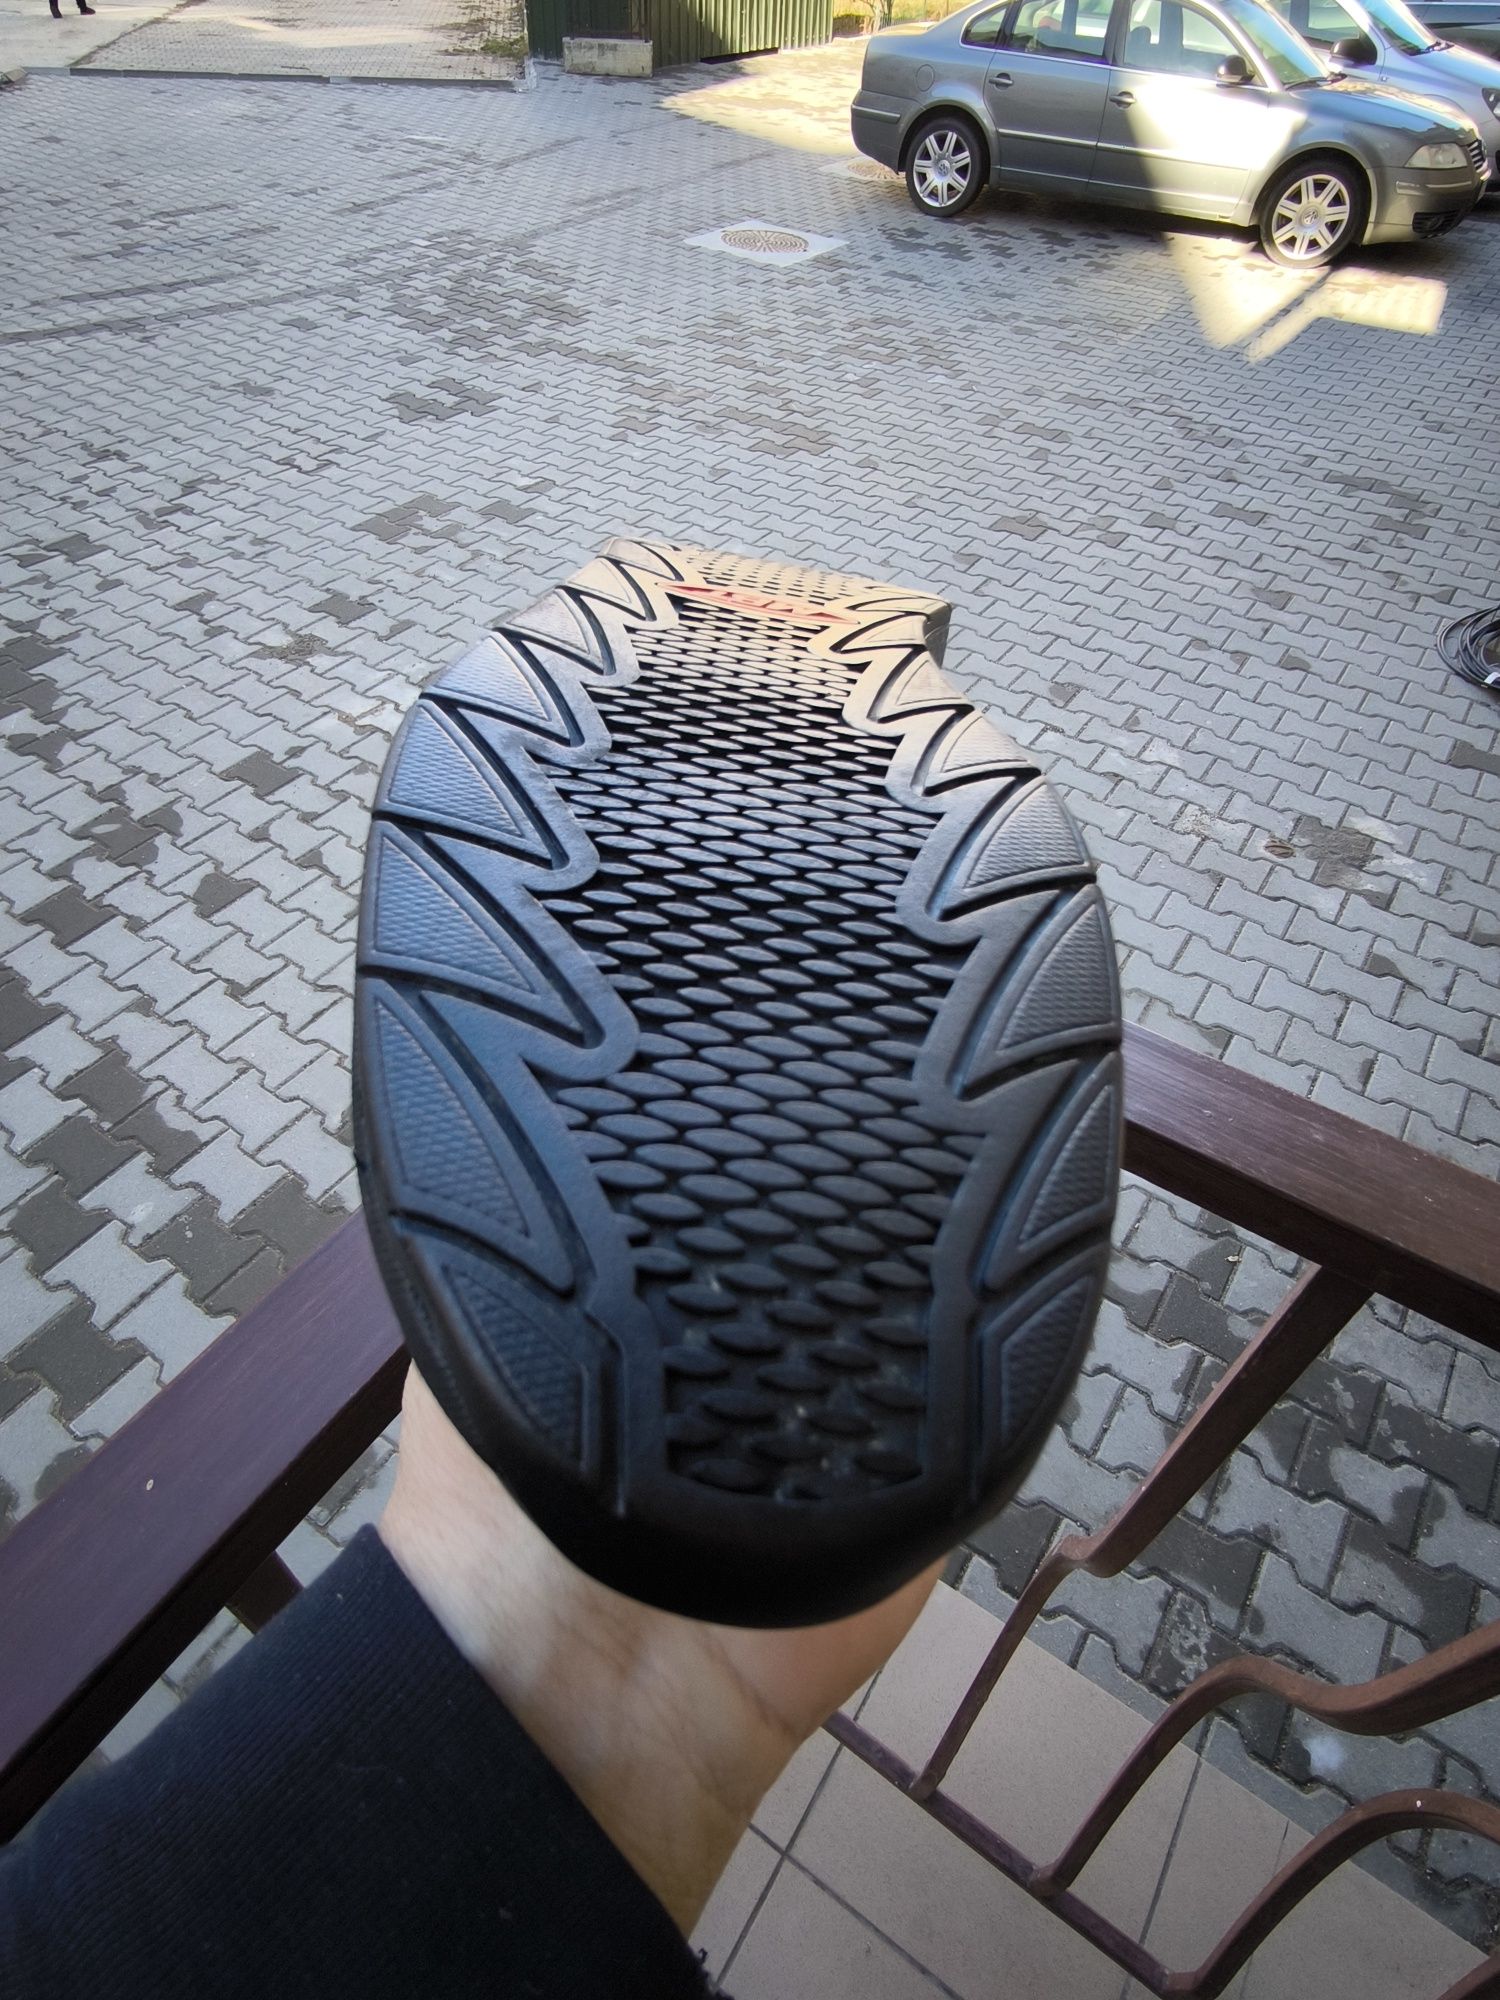 Preț fix,Pantofi MBT din piele naturala Nr37 Int24,7cm nu Nike Adidas